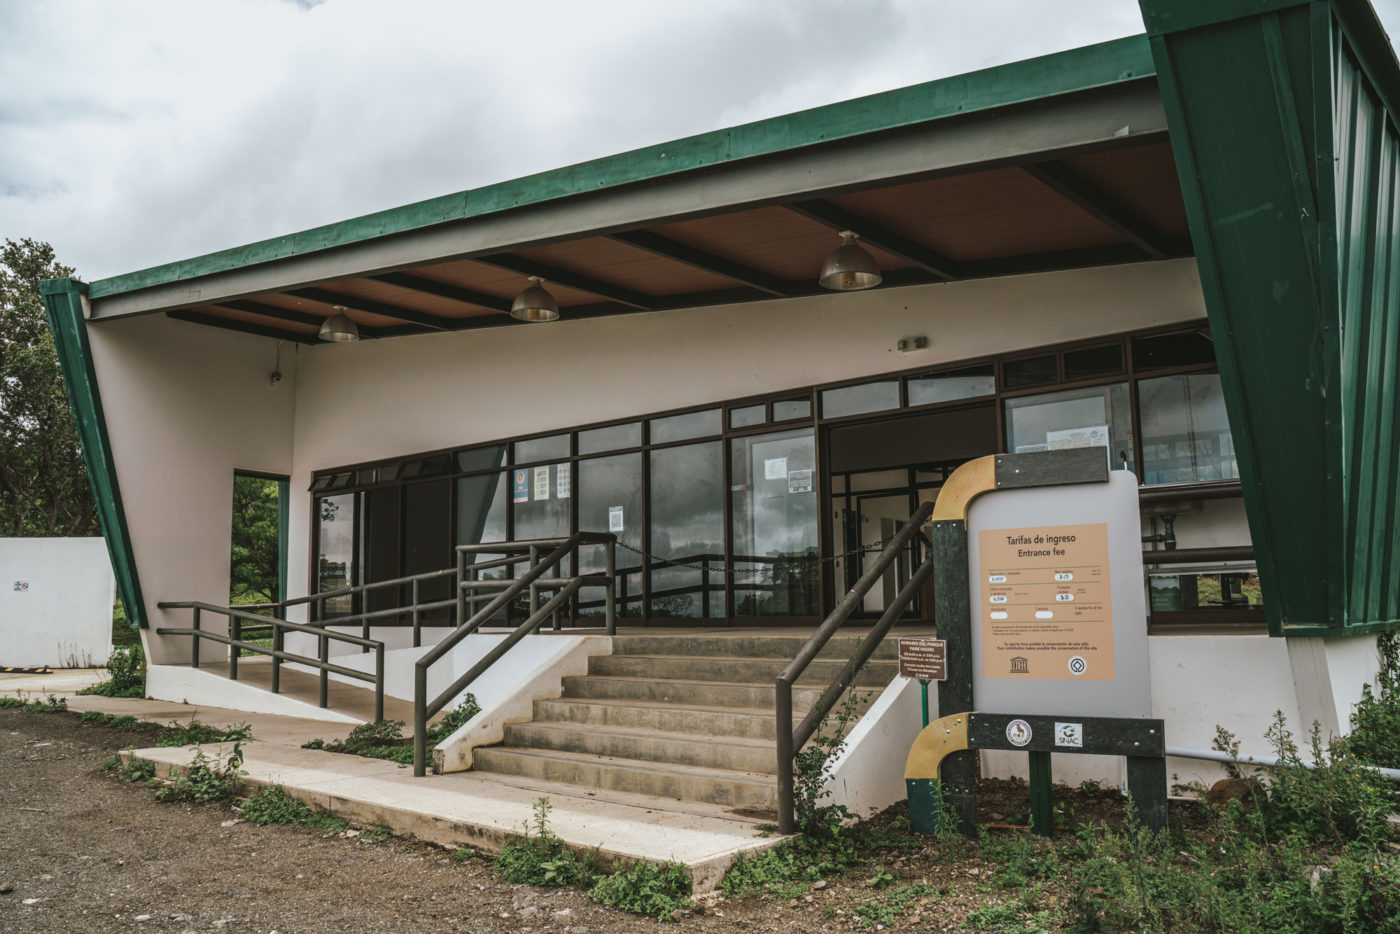 Entrance office at Rincon de la Vieja National Park